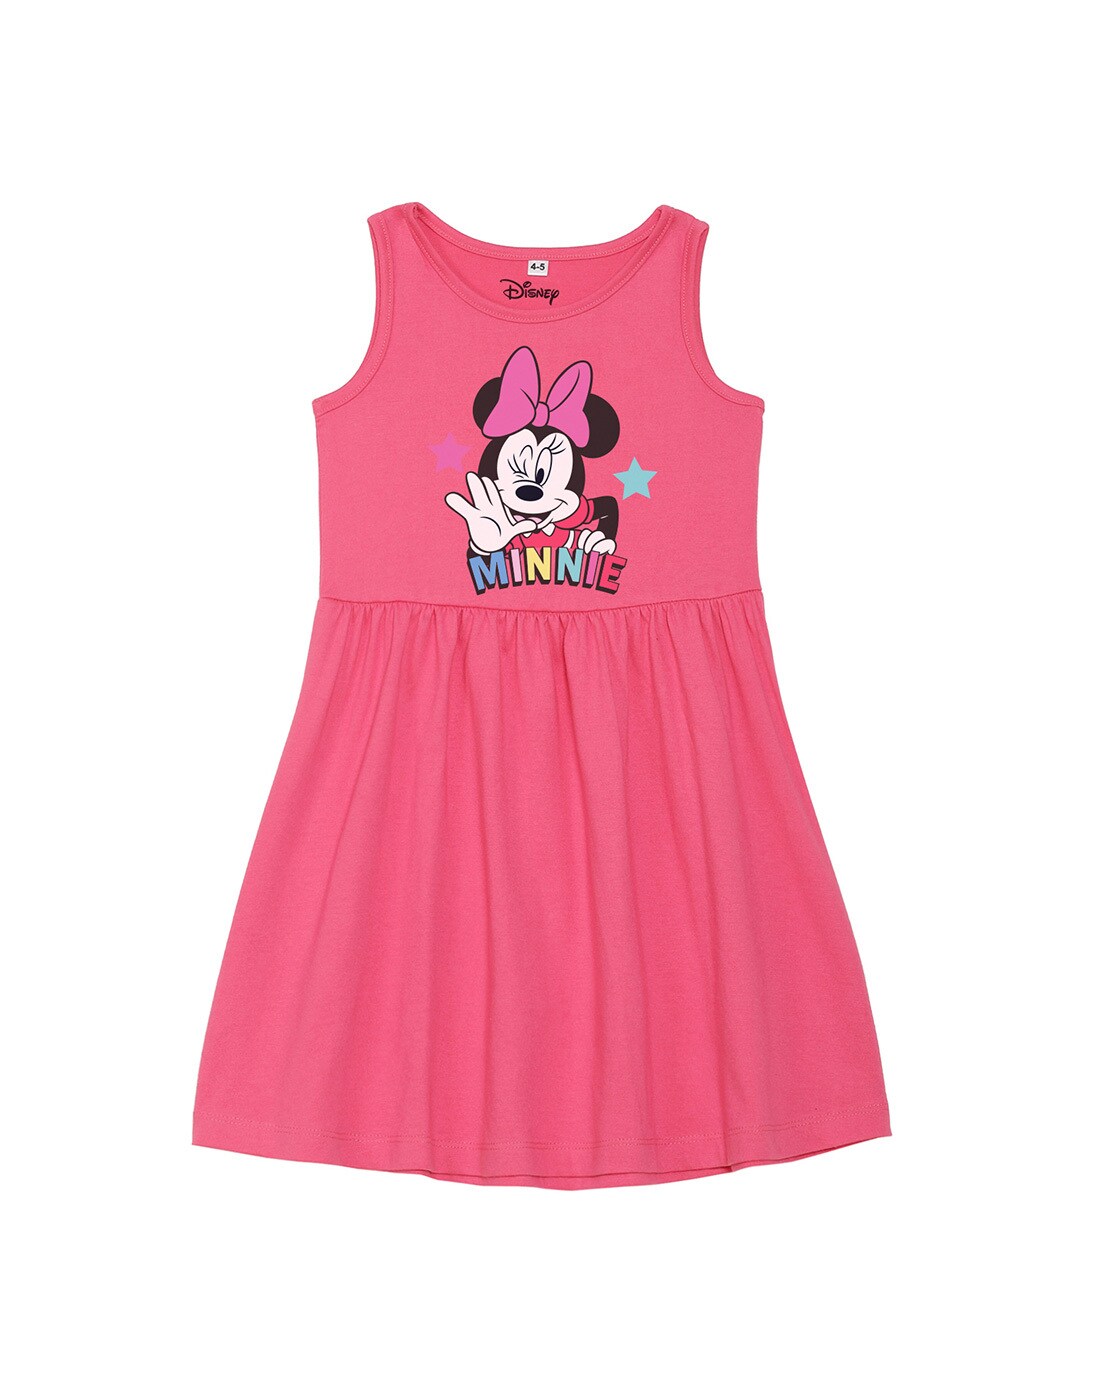 Hot Pink White Polka Dot Minnie Mouse Dress